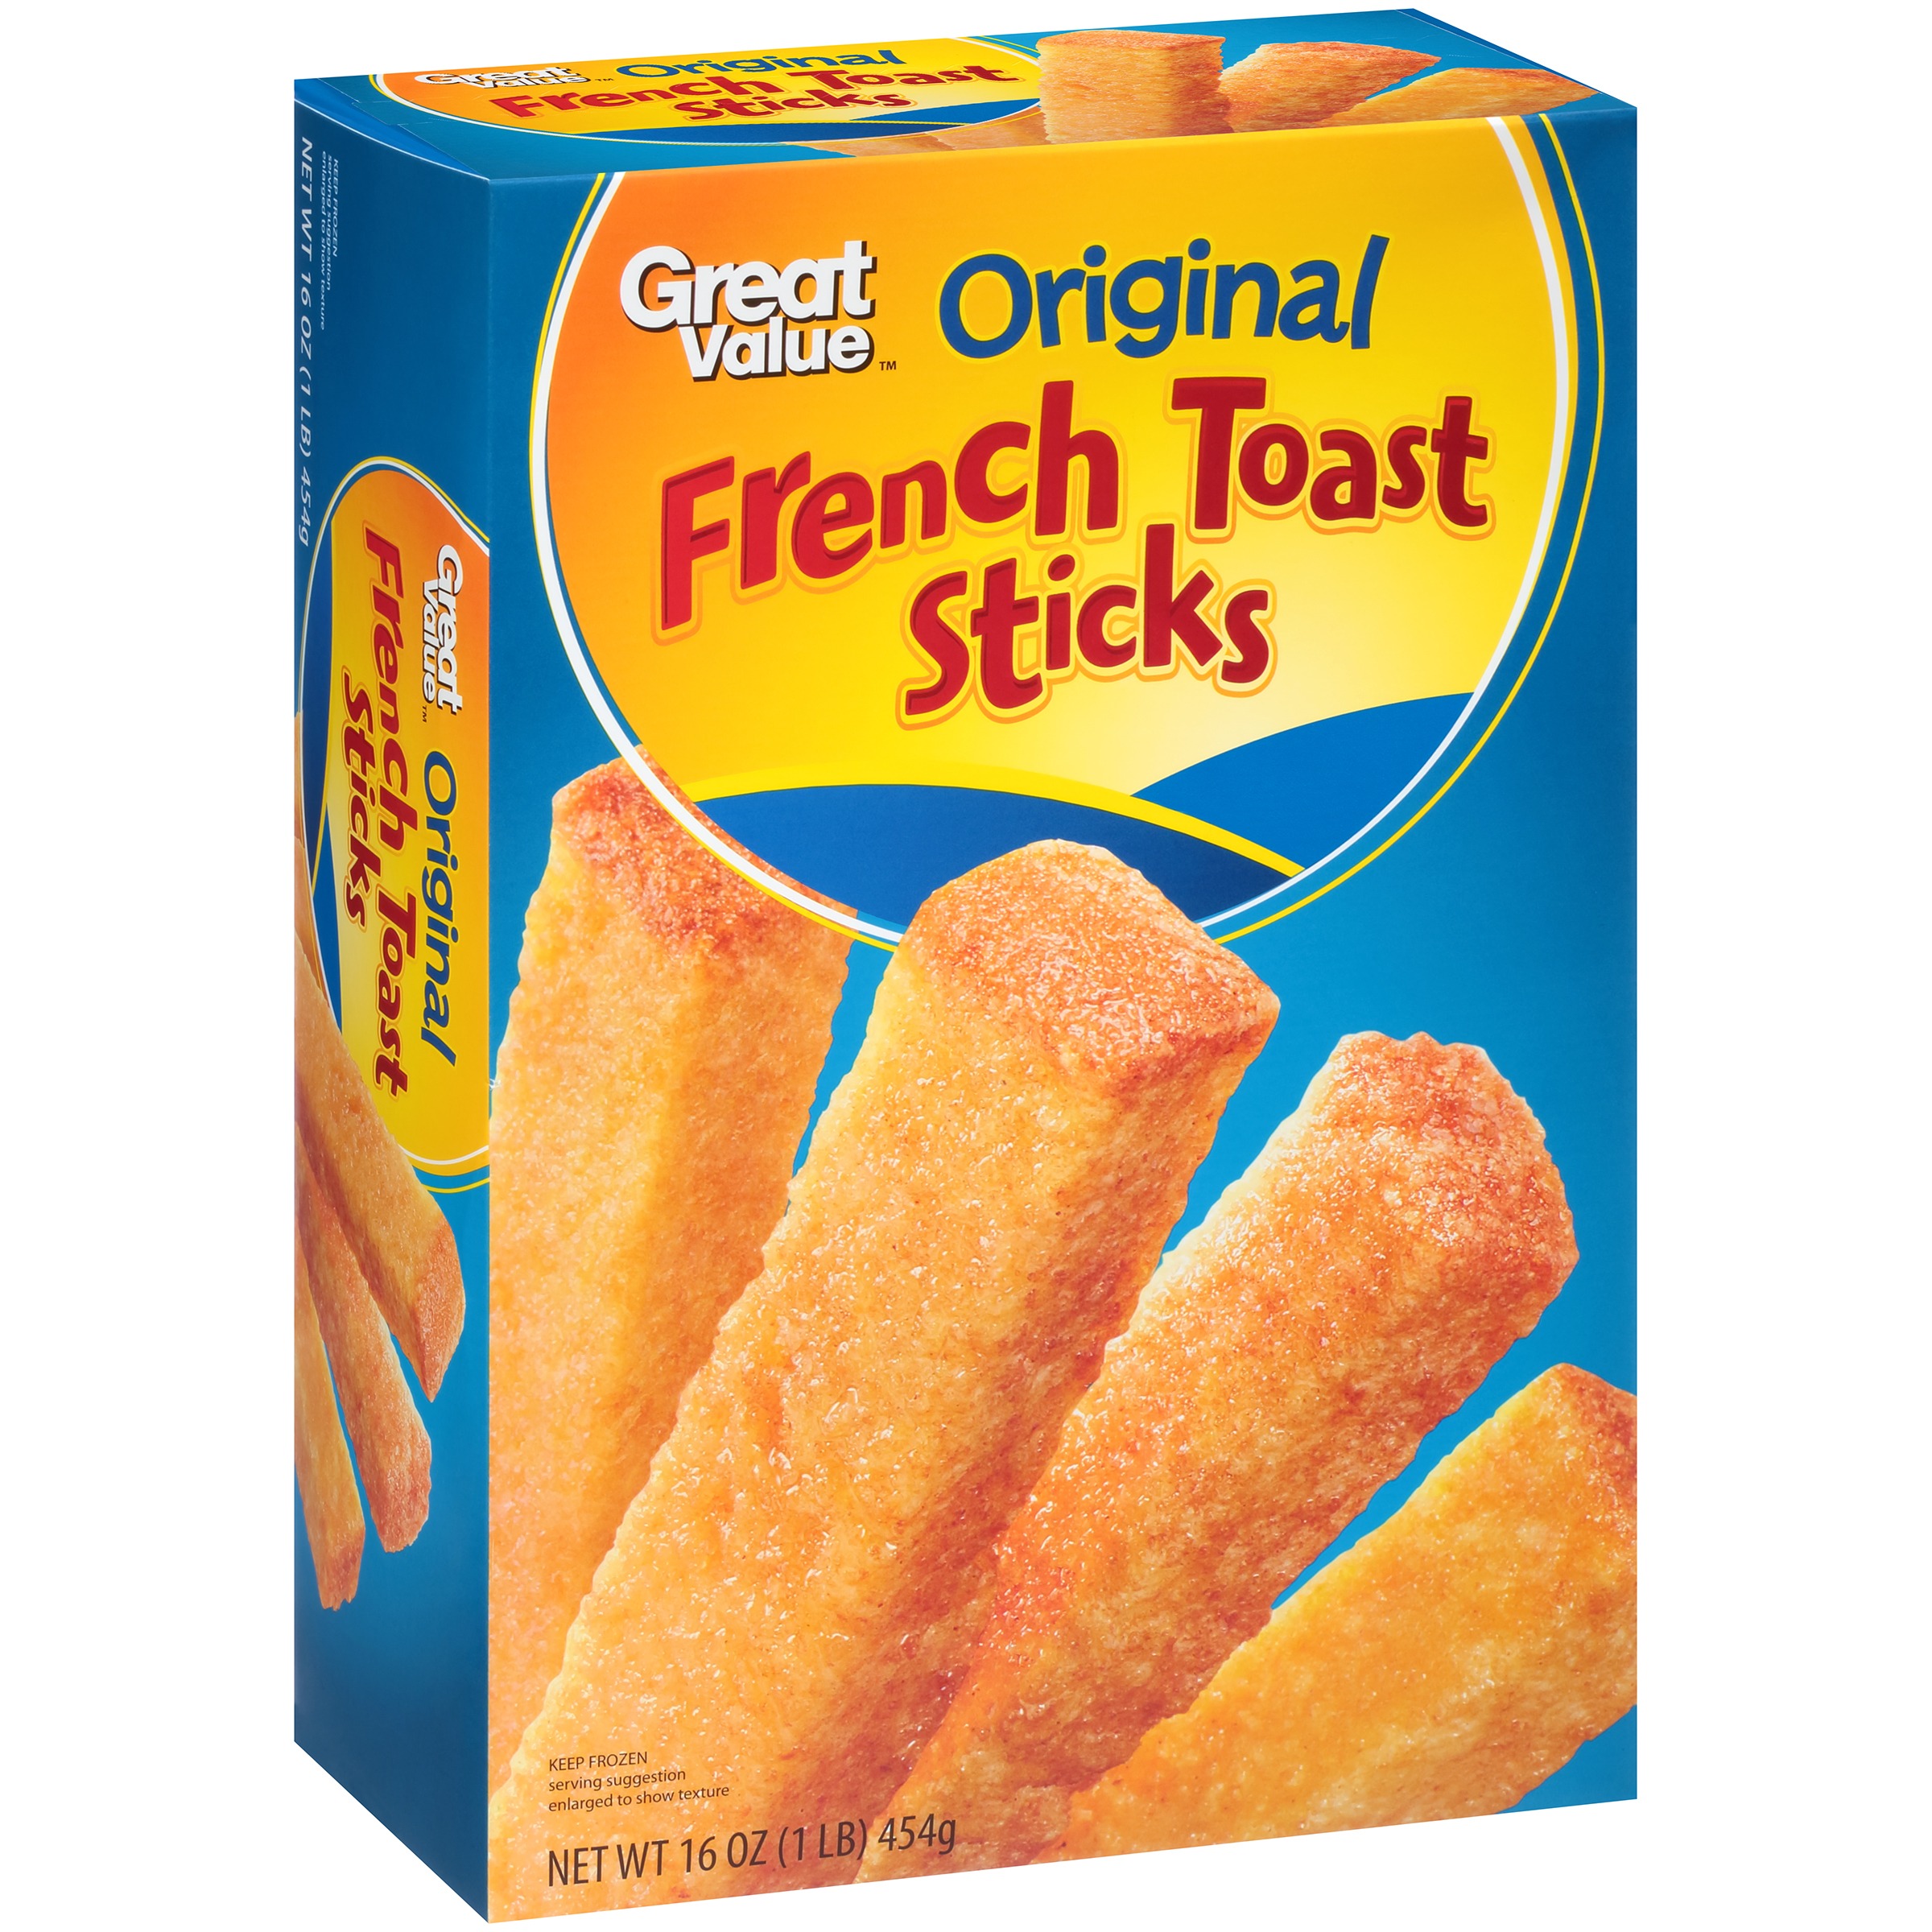 Great Value Original French Toast Sticks, 16 Oz